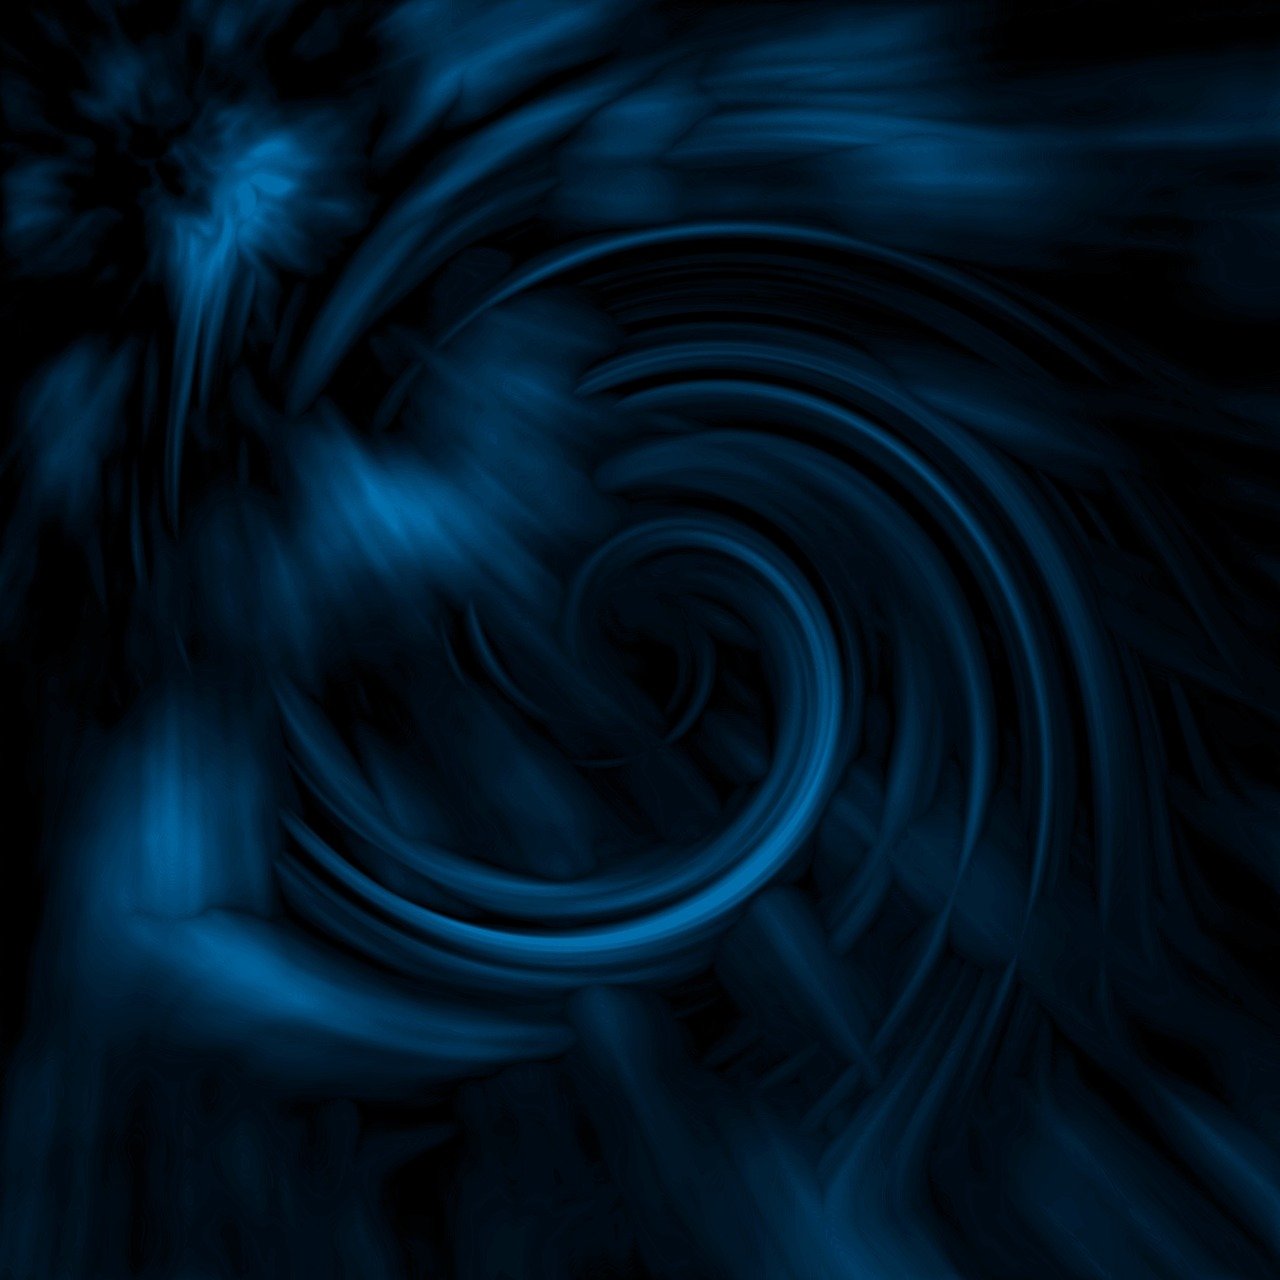 a close up of a blue swirl on a black background, a digital painting, deviantart, dark atmosphere illustration, fine background proportionate, dark background”